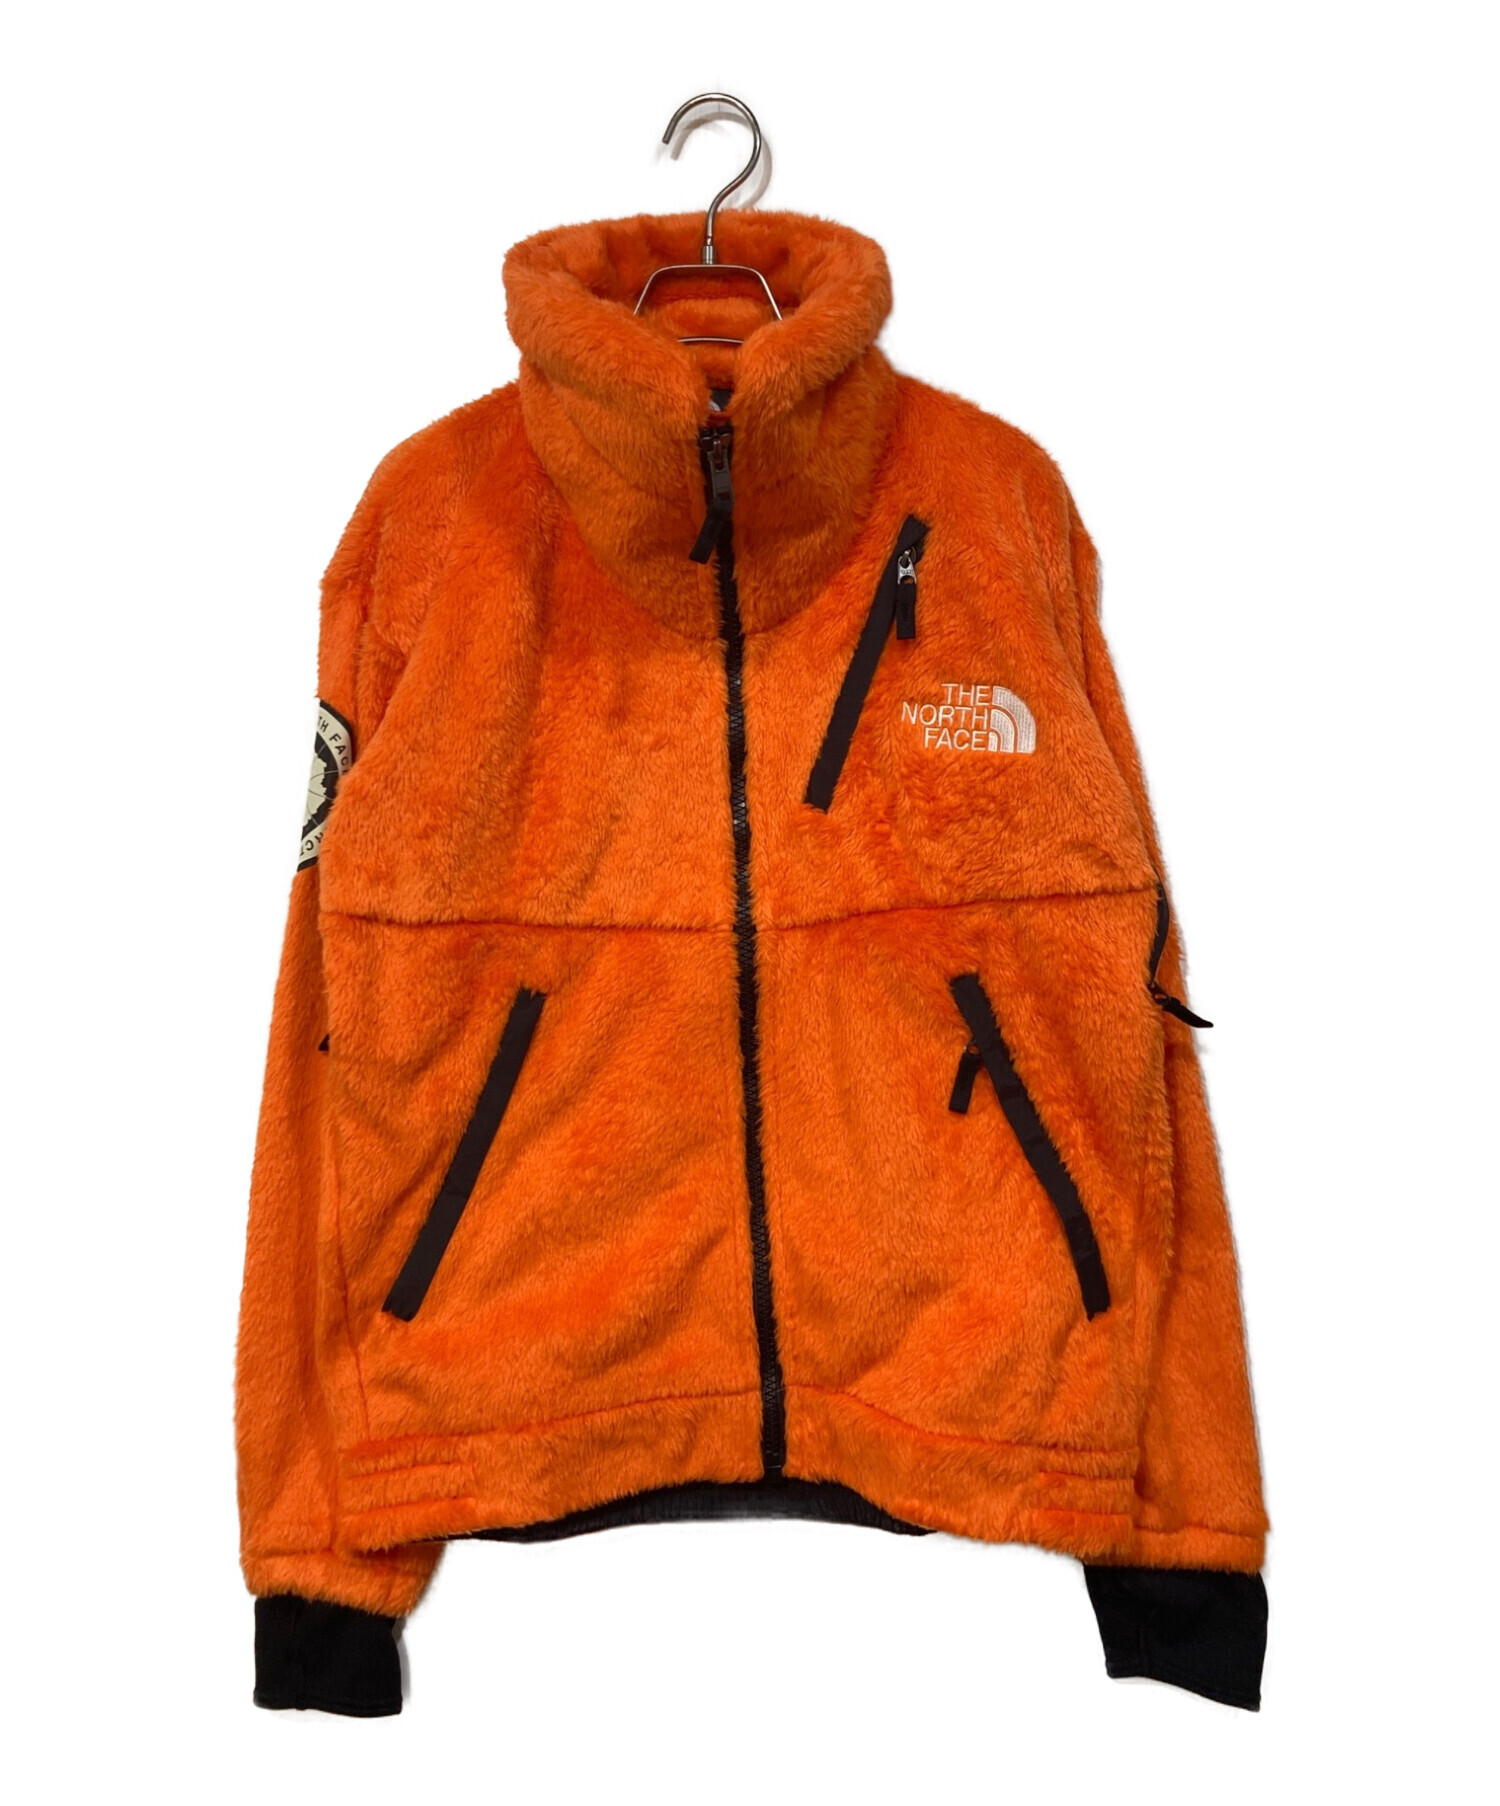 THE NORTH FACE (ザ ノース フェイス) Antarctica Versa Loft Jacket オレンジ サイズ:L